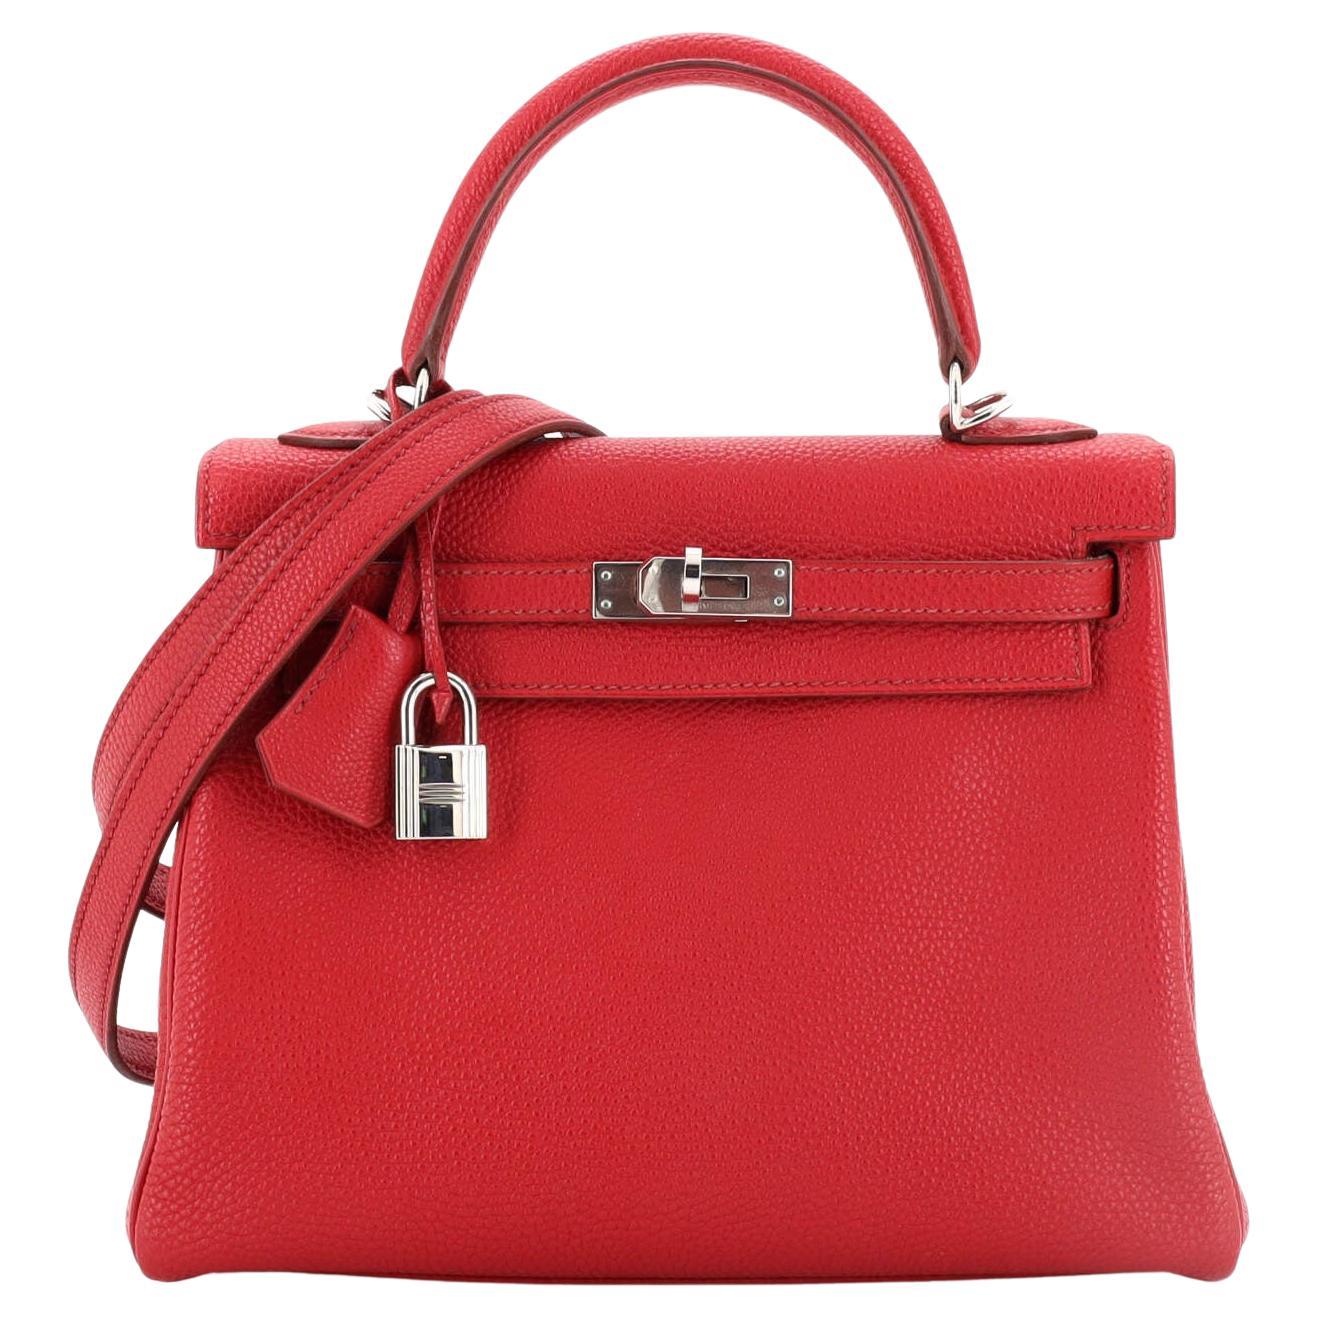 Hermes Kelly Handbag Rouge Garance Togo with Palladium Hardware 25